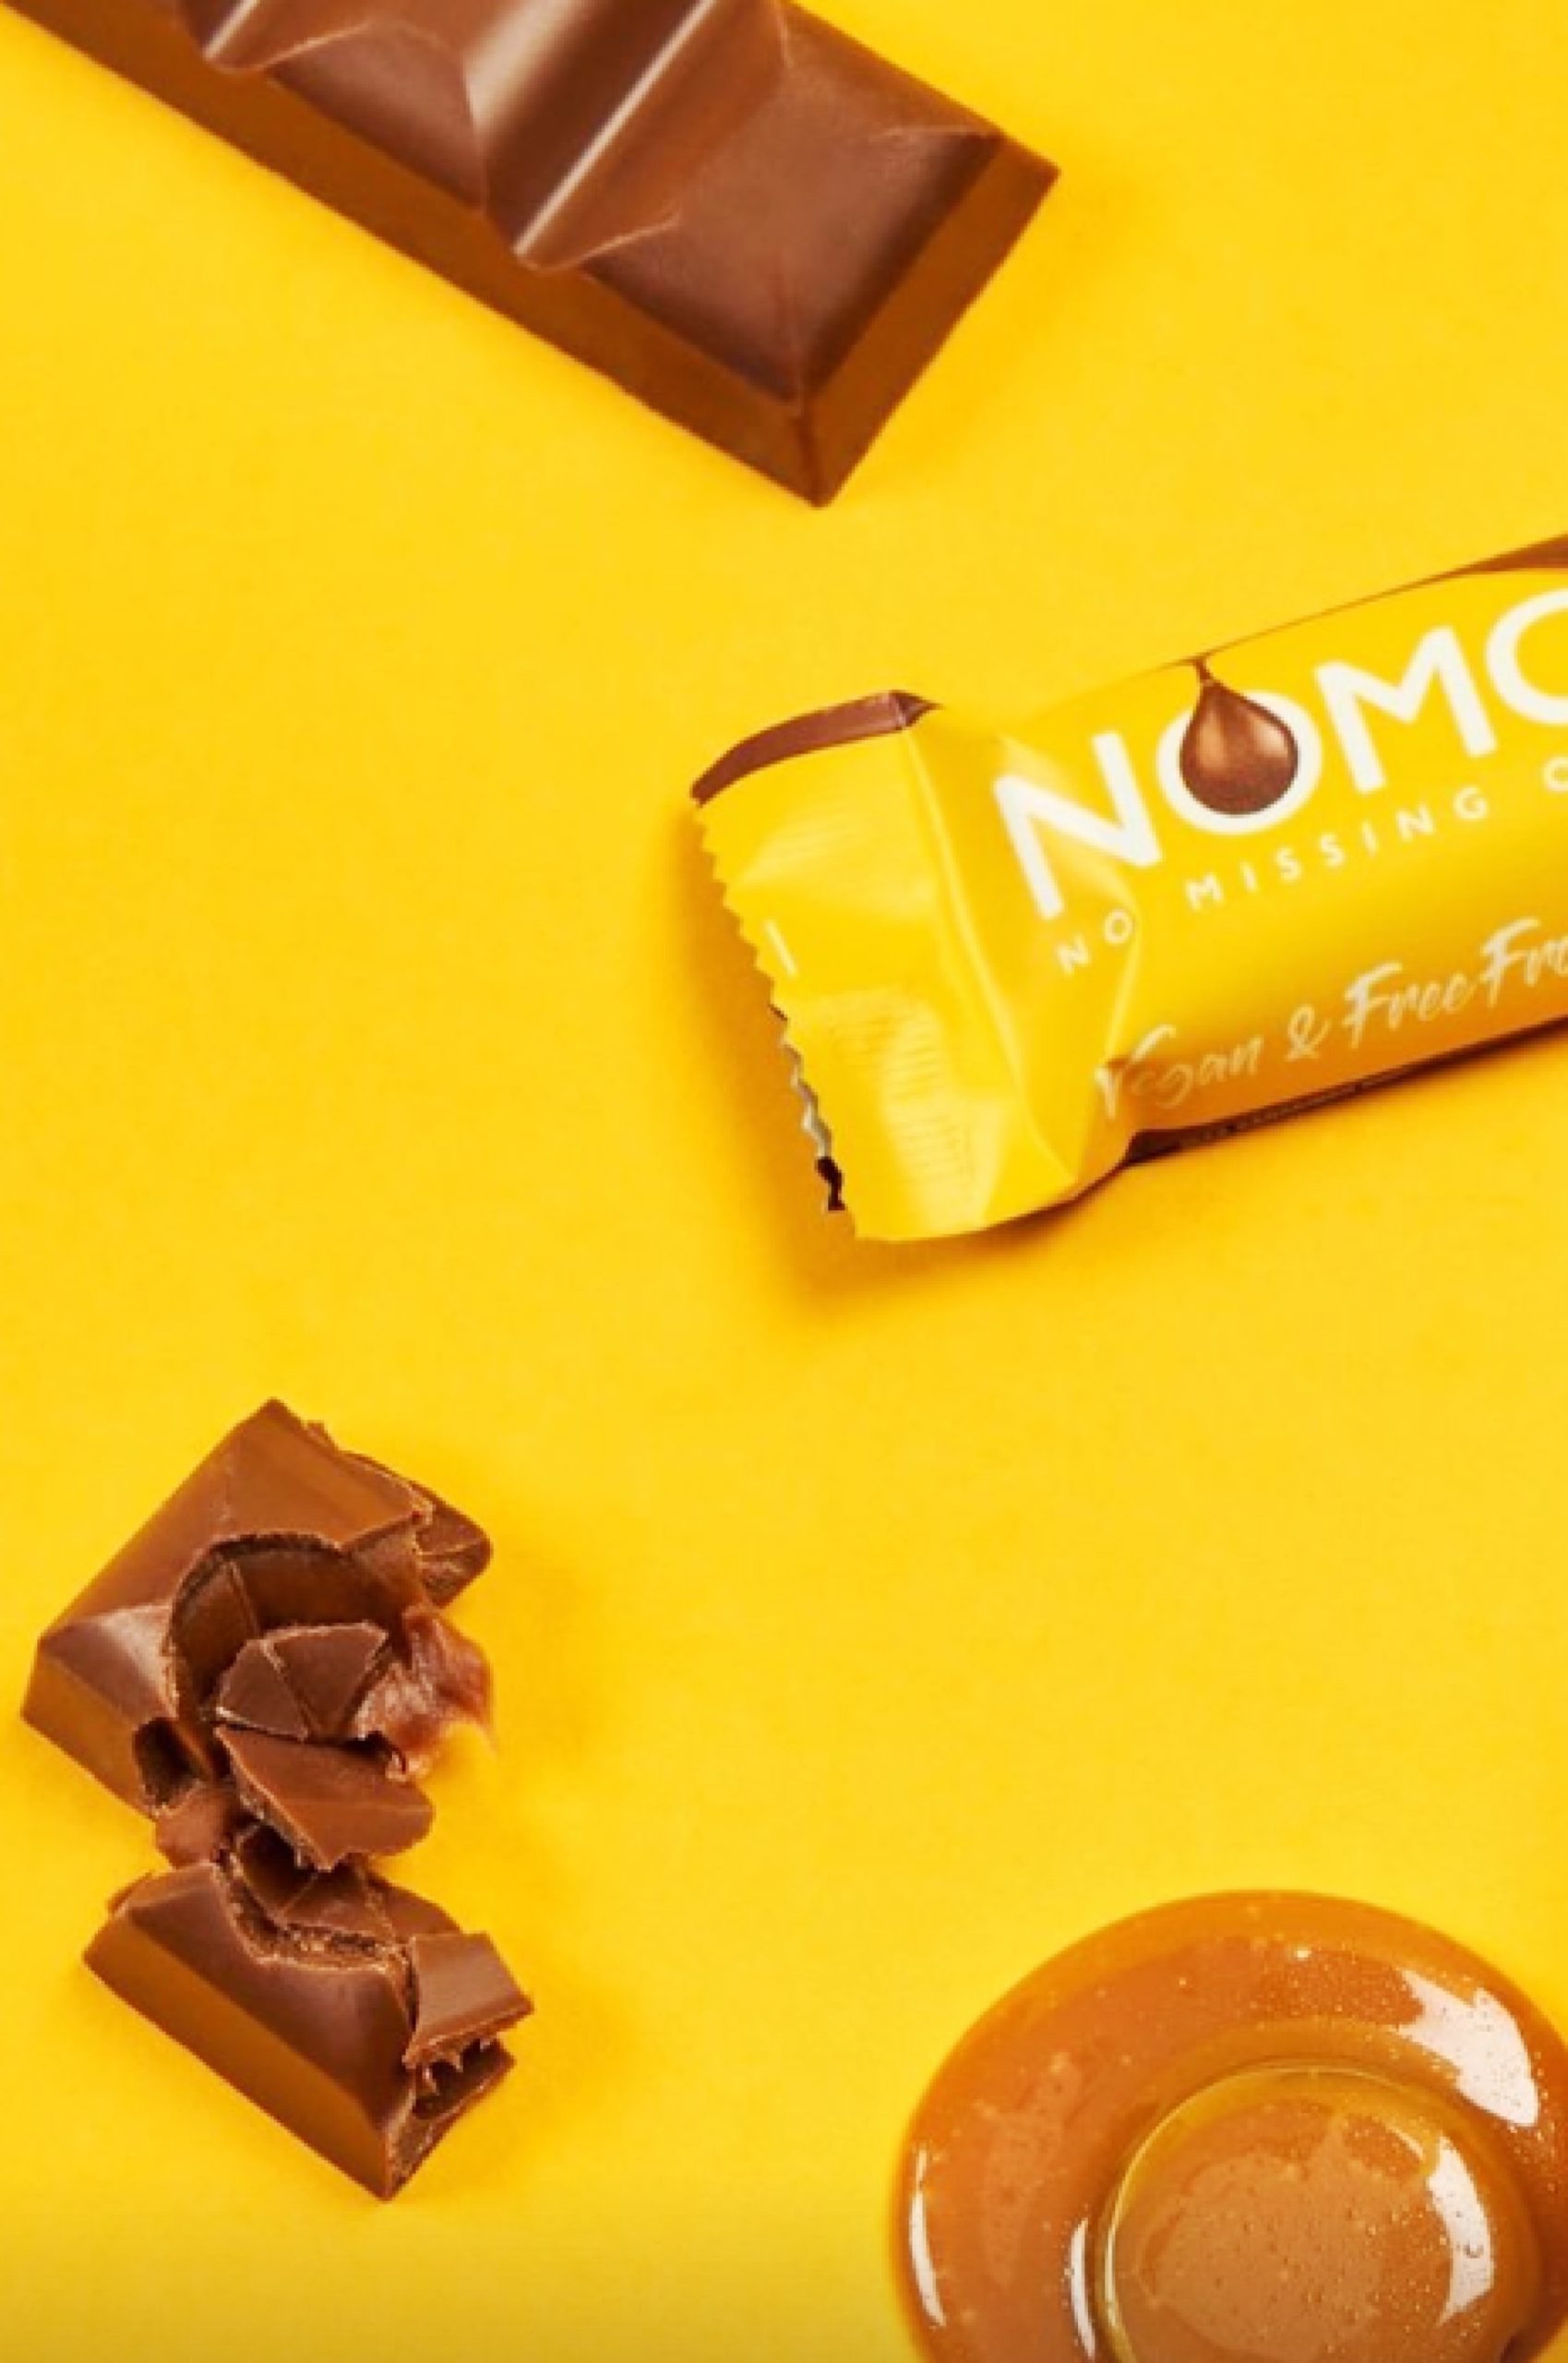 <img src="nomo.jpg" alt="nomo caramel chocolate bar"/> 